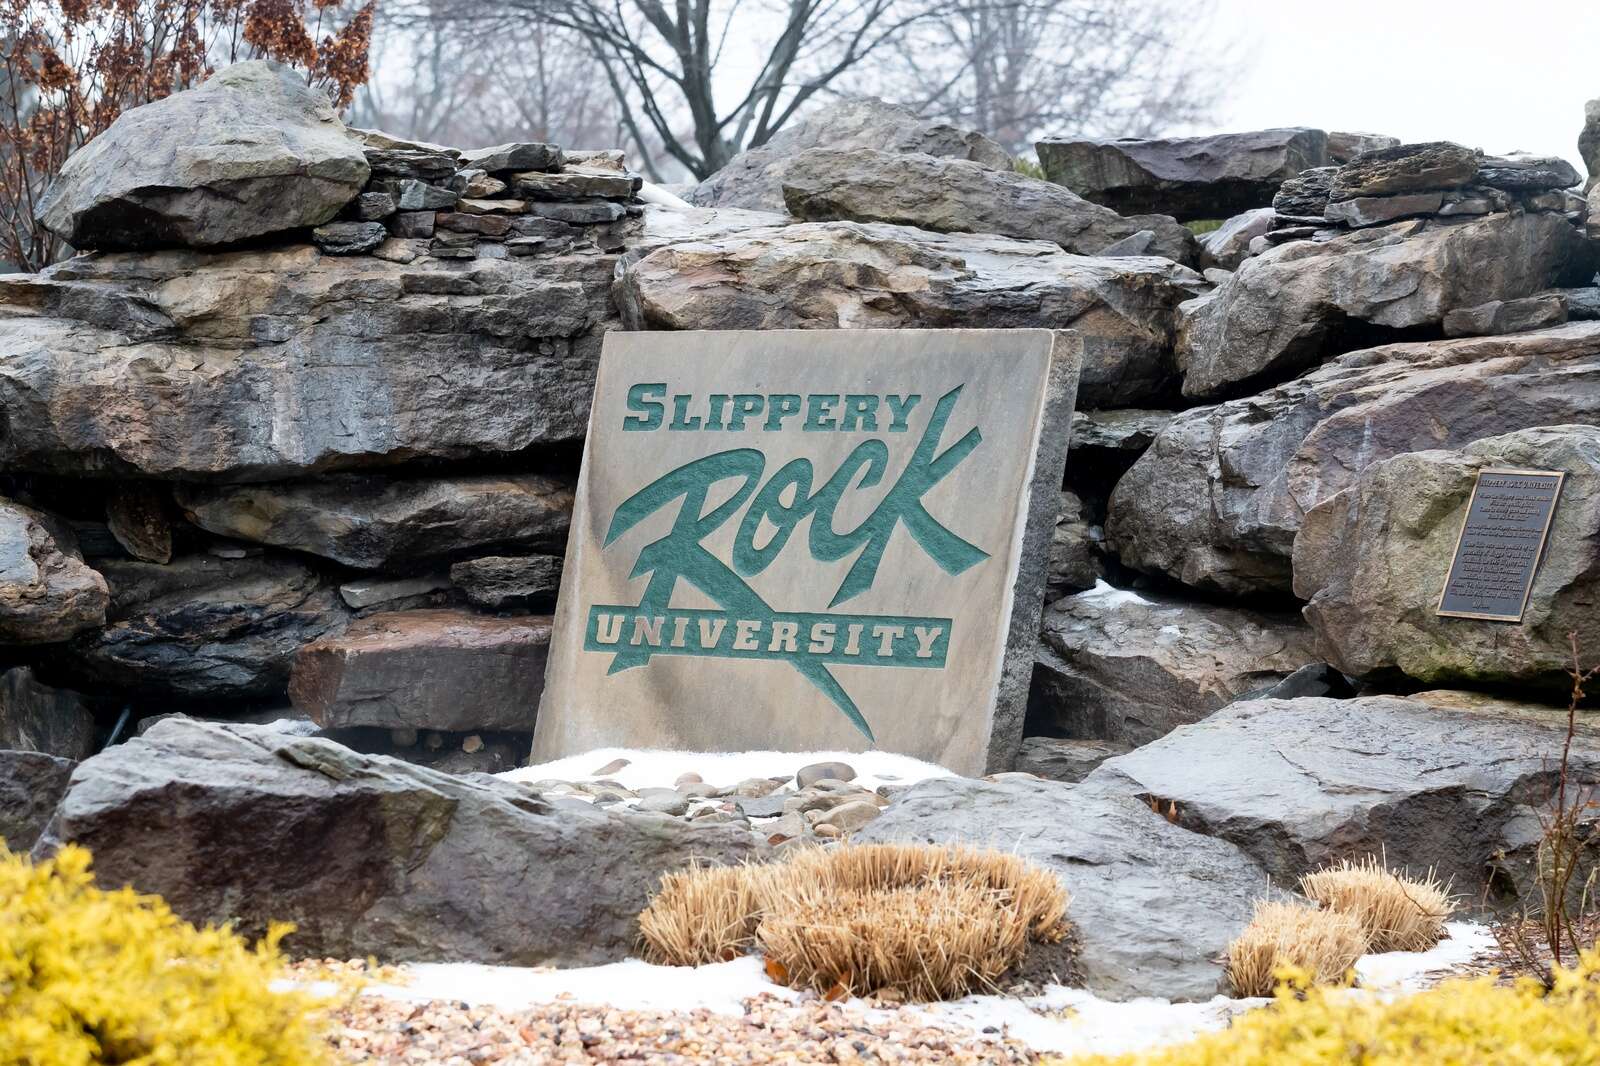 The Slippery Rock University sign